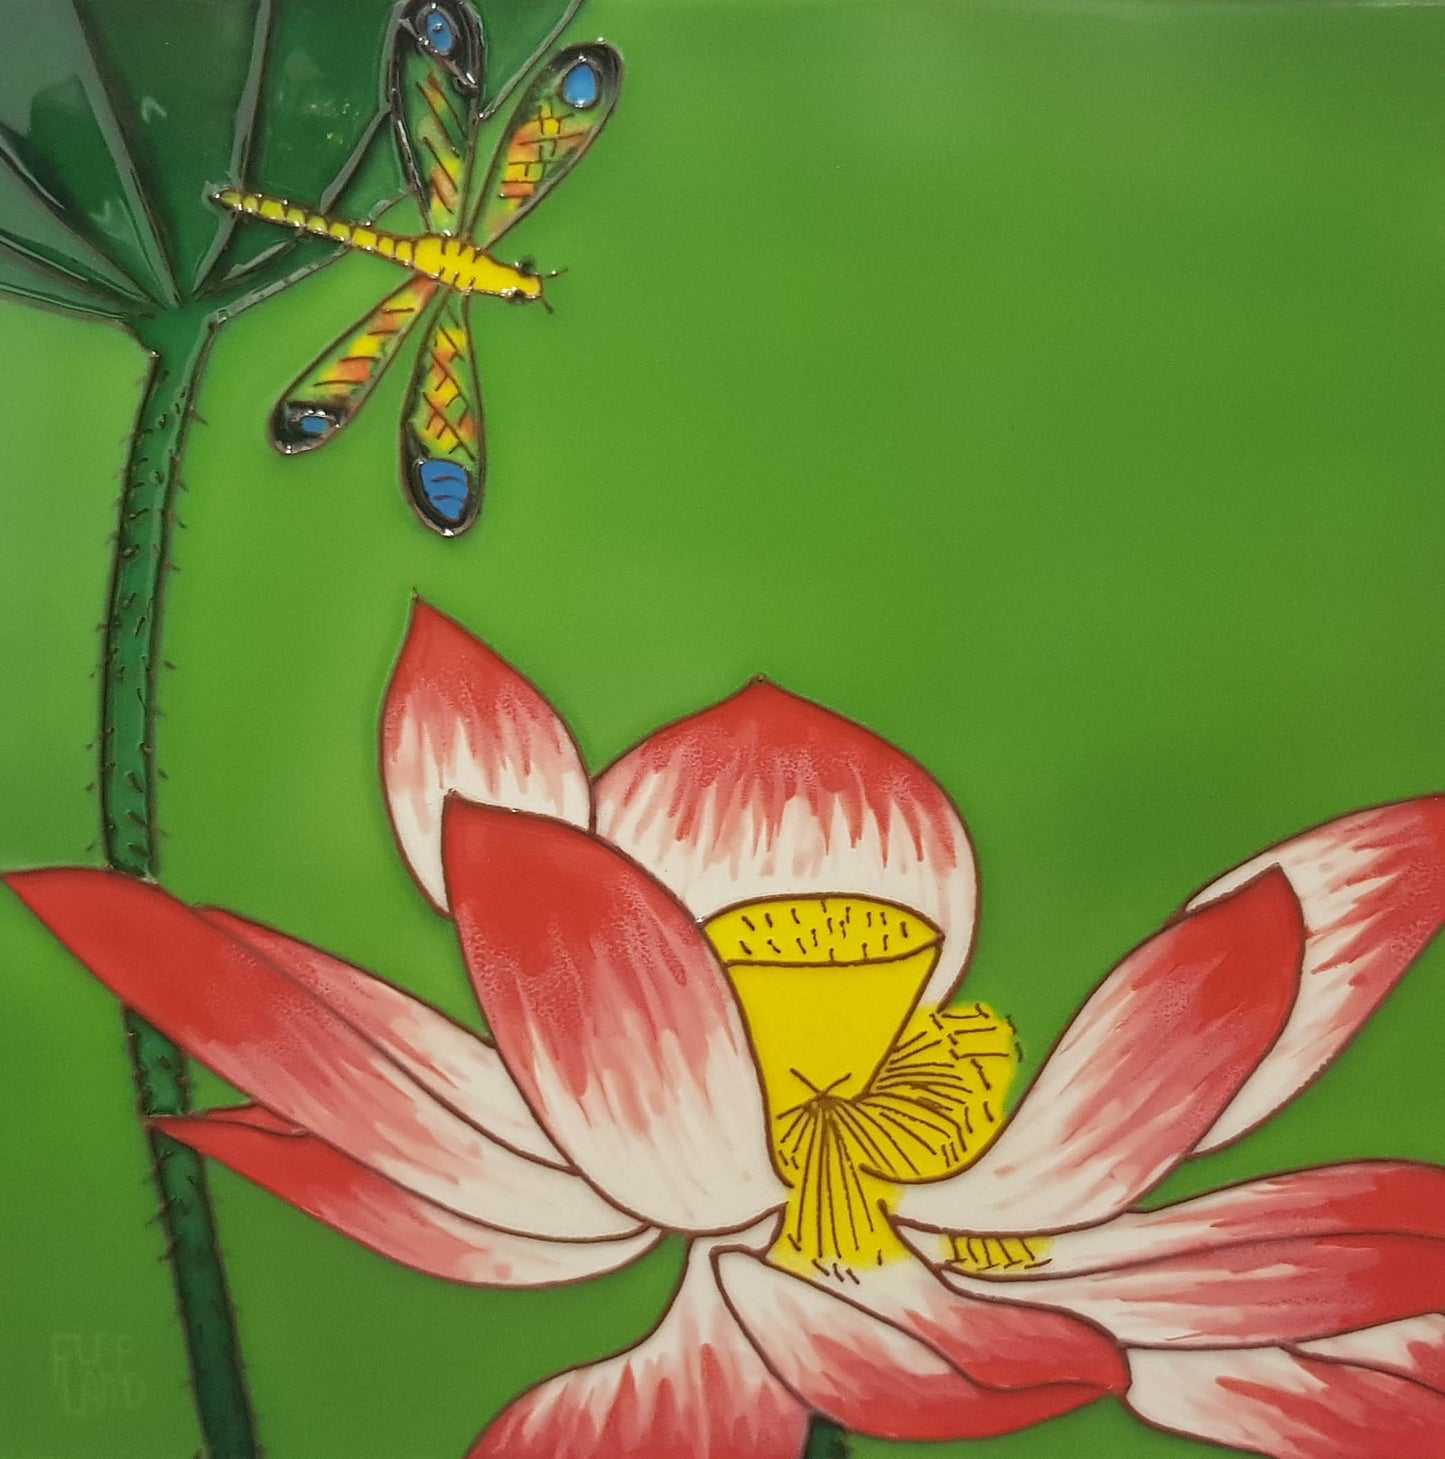 3523 Lotus Flower with Dragonfly Top Left 30cm x 30cm Pureland Ceramic Tile